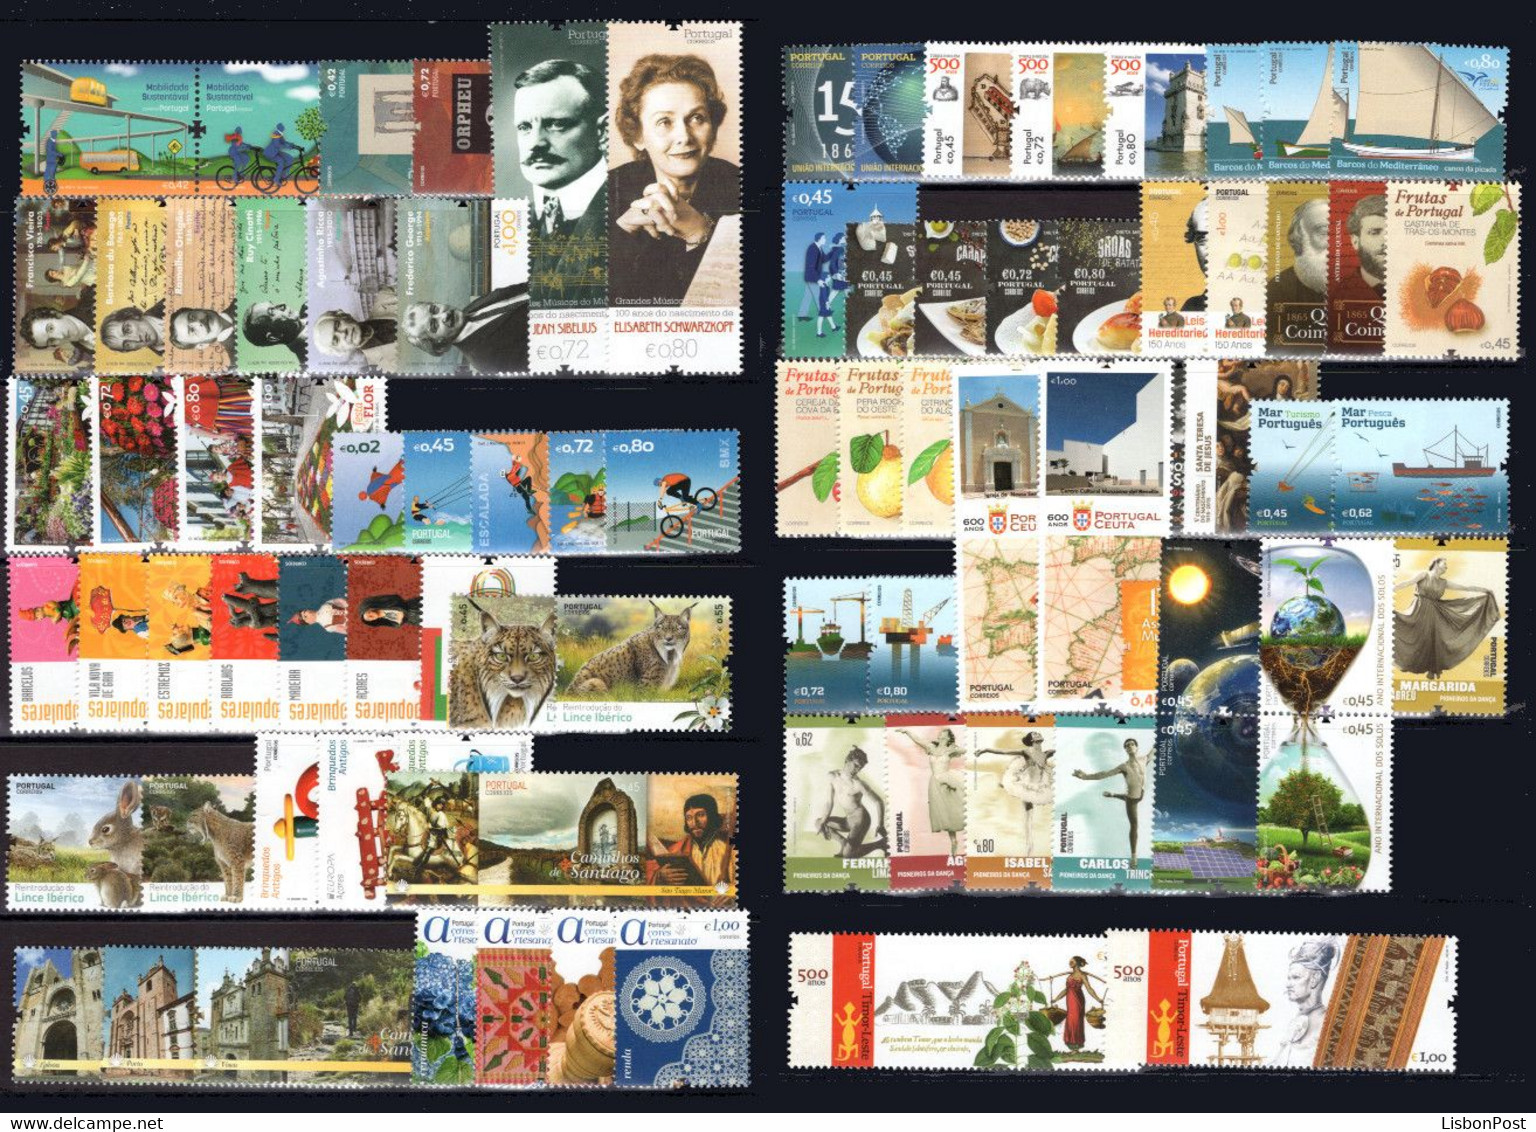 2015 Portugal Azores Madeira Complete Year MNH Stamps. Année Compléte NeufSansCharnière. Ano Completo Novo Sem Charneira - Années Complètes